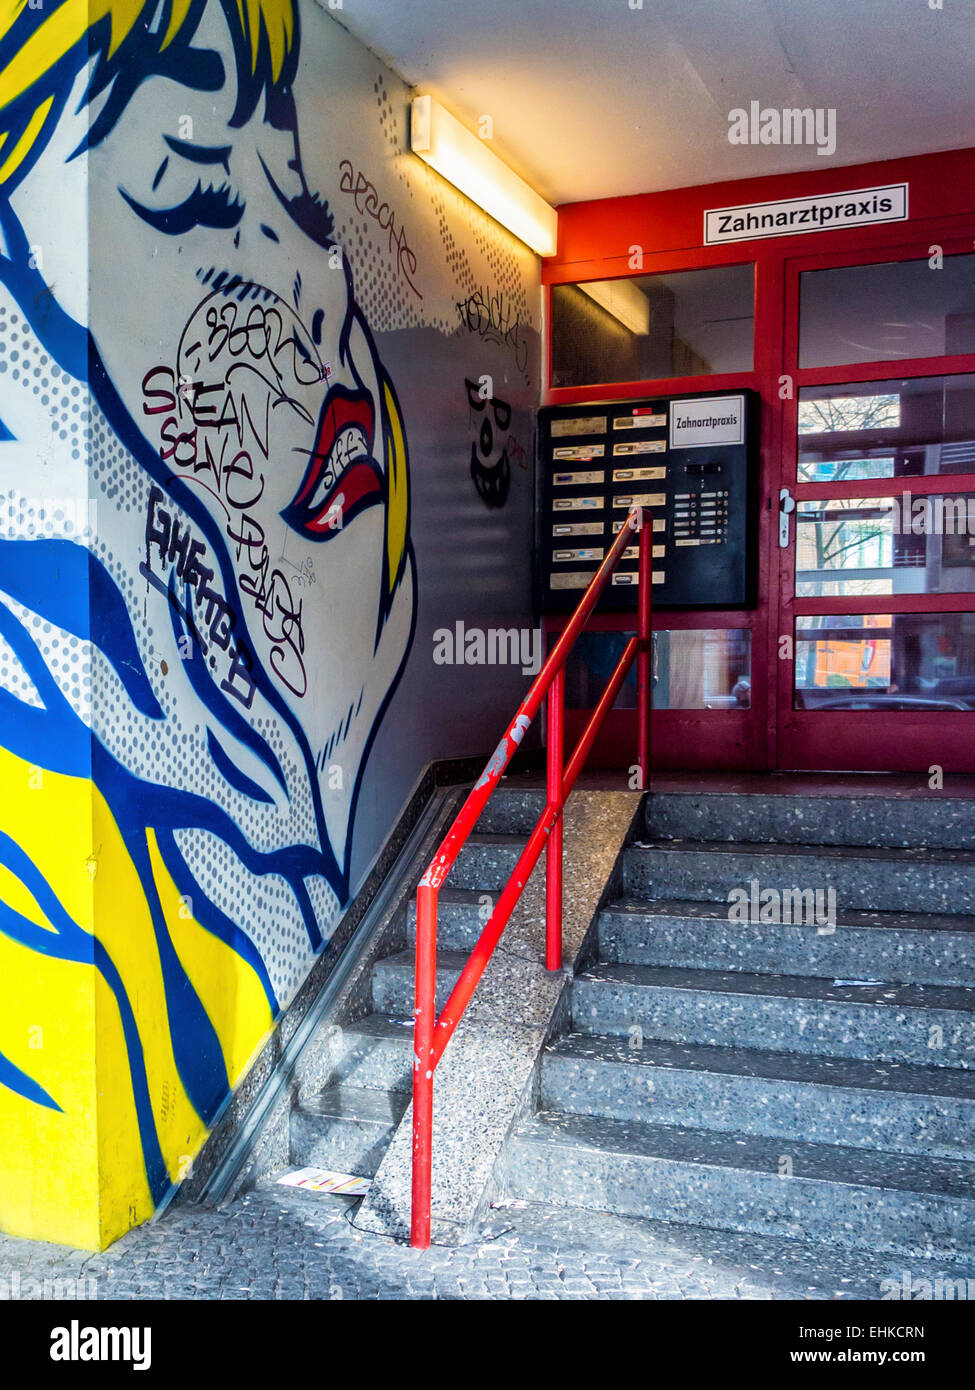 Entrance to dental practice with artwork and graffiti, Kreuzberg, Berlin Stock Photo